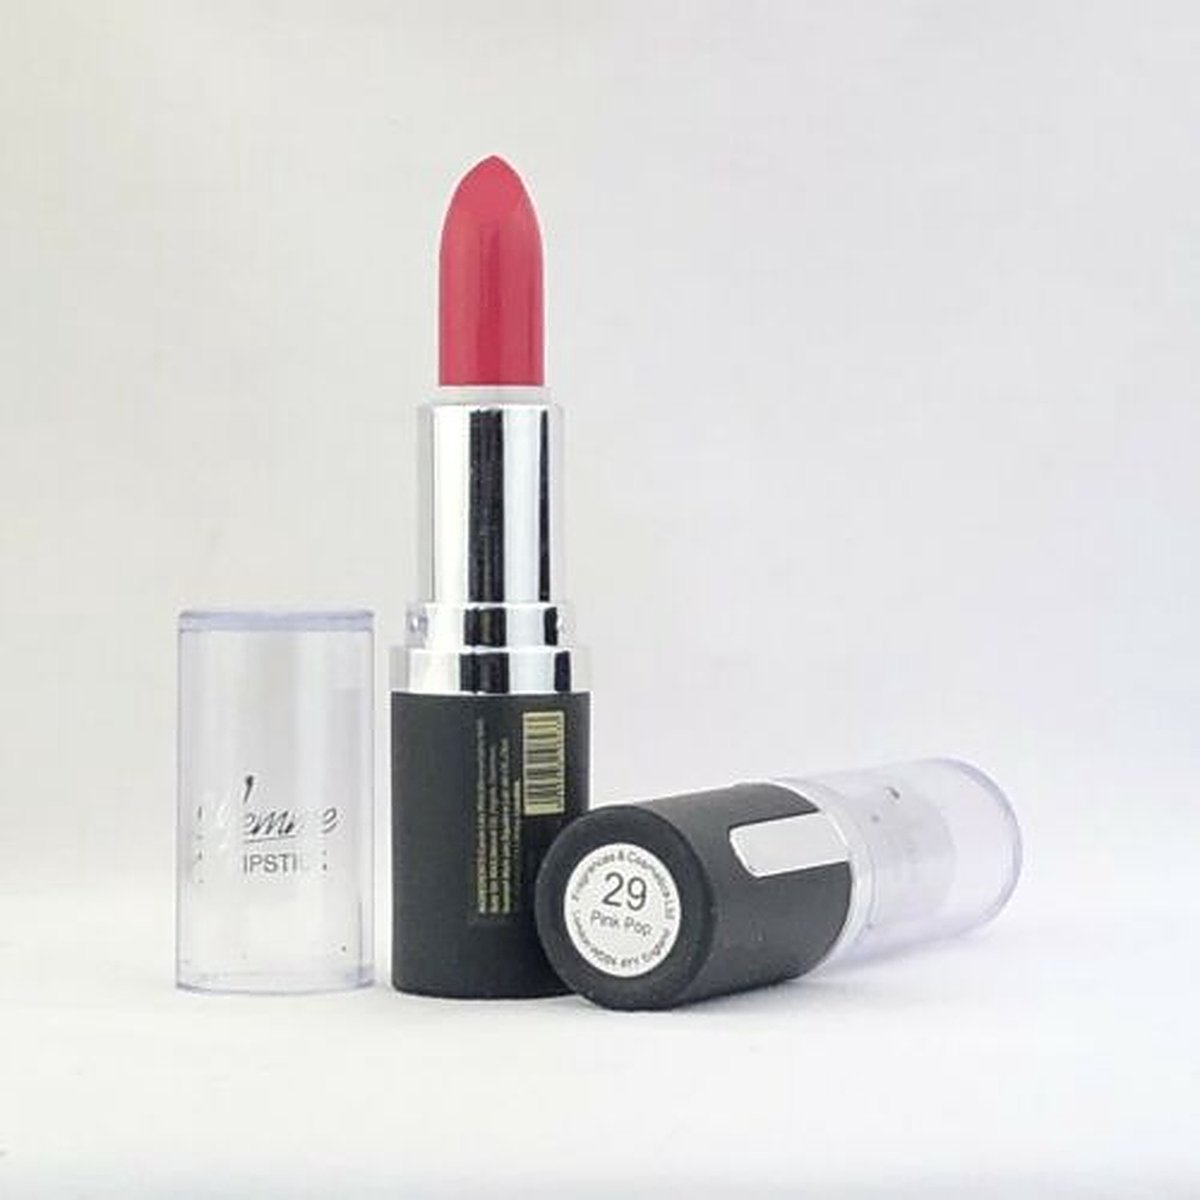 La Femme lipstick 29 Pink Pop